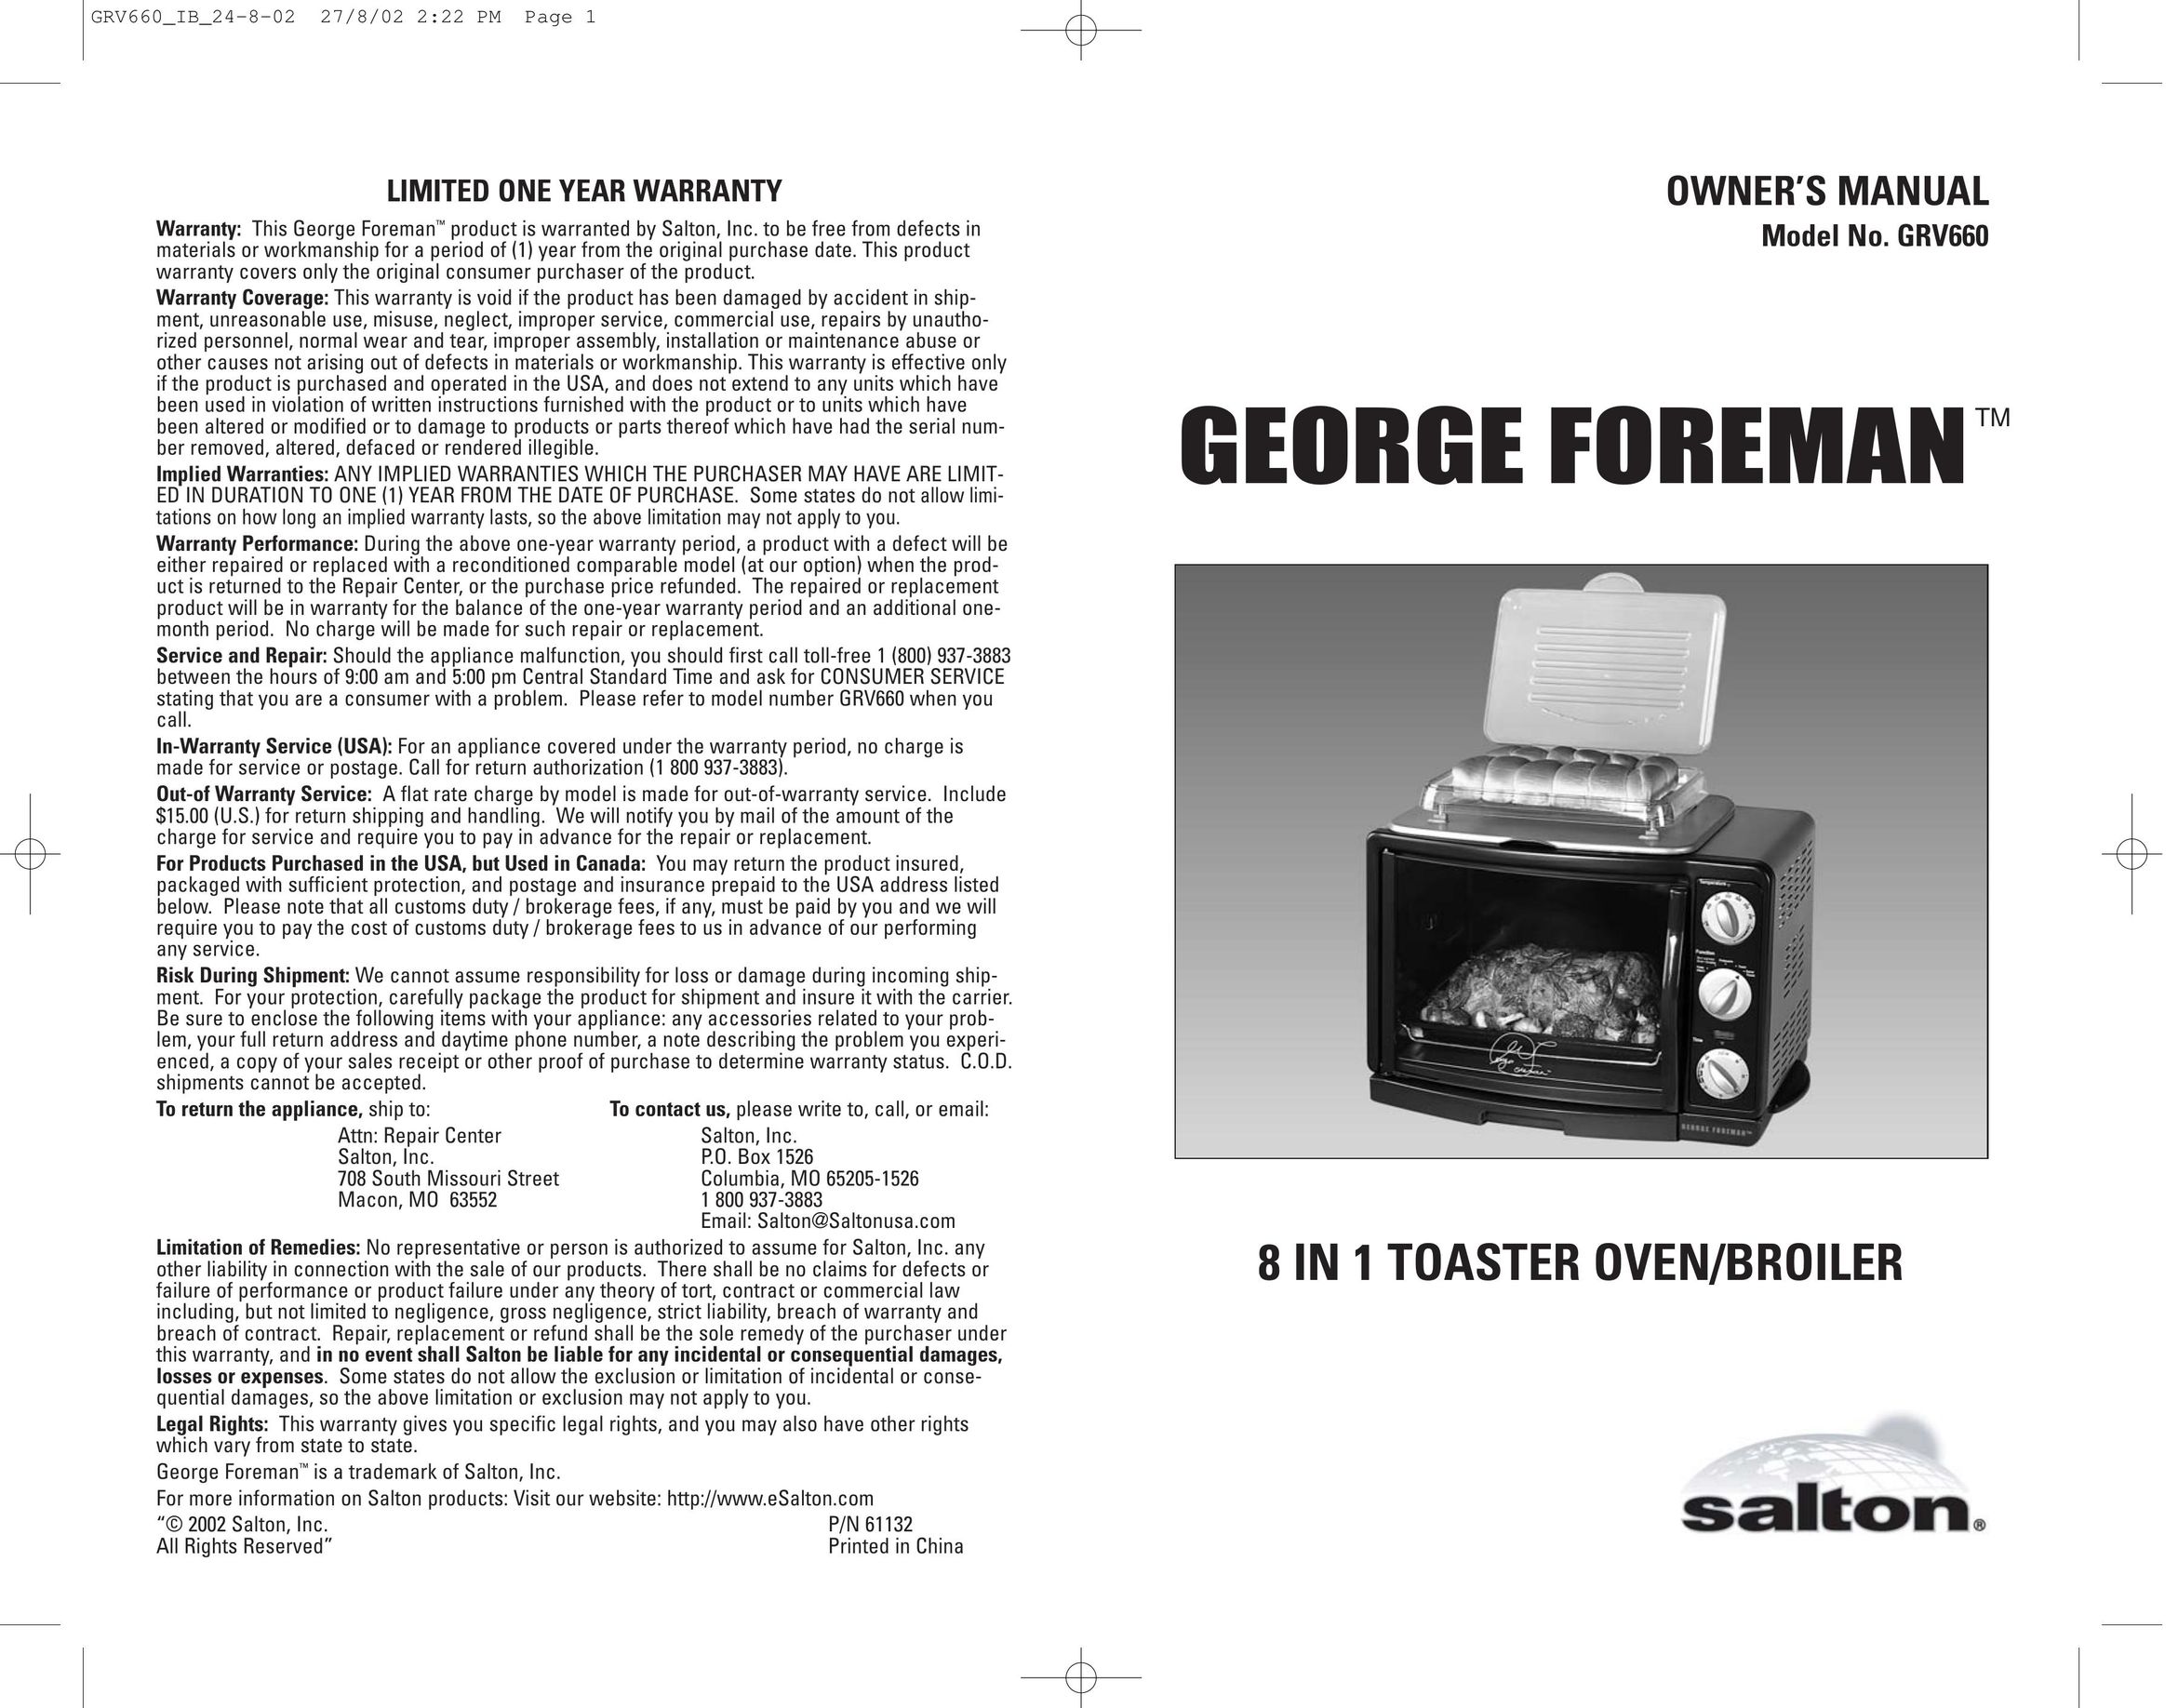 George Foreman GRV660 Oven User Manual